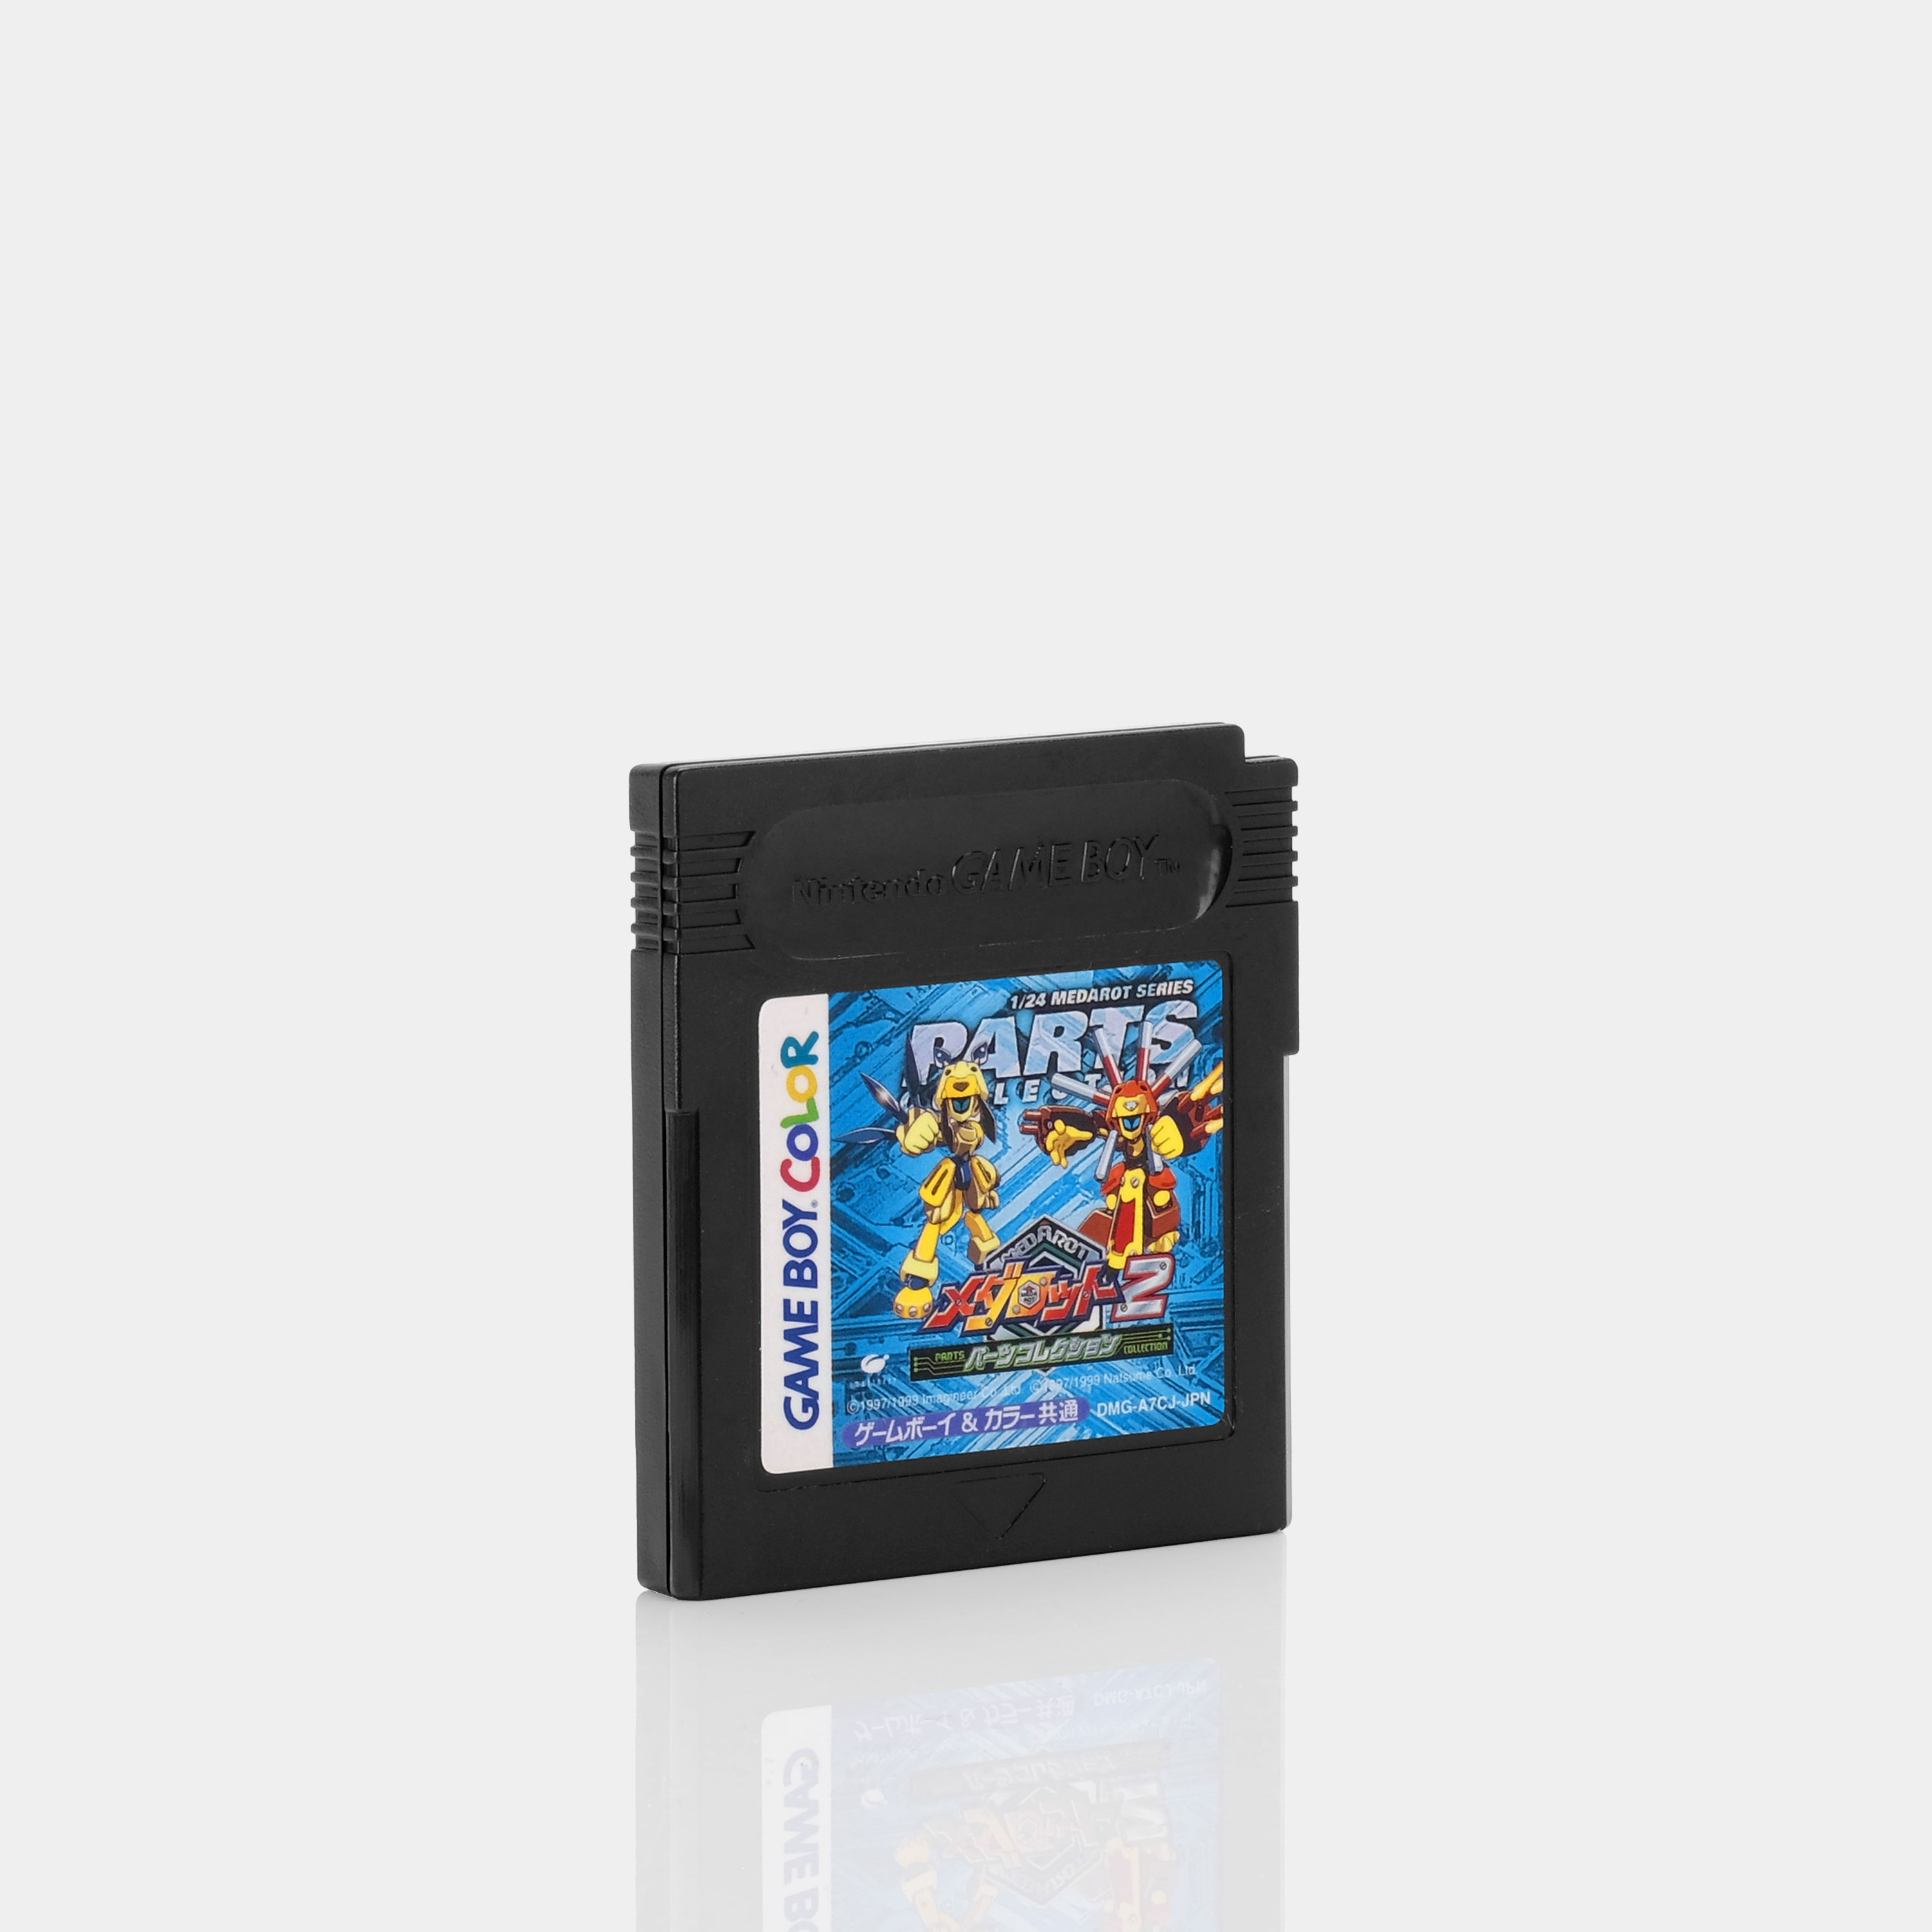 Medarot 2 Parts Collection メダロット 2 パーツコレクション (Japanese Version) Game Boy Color Game